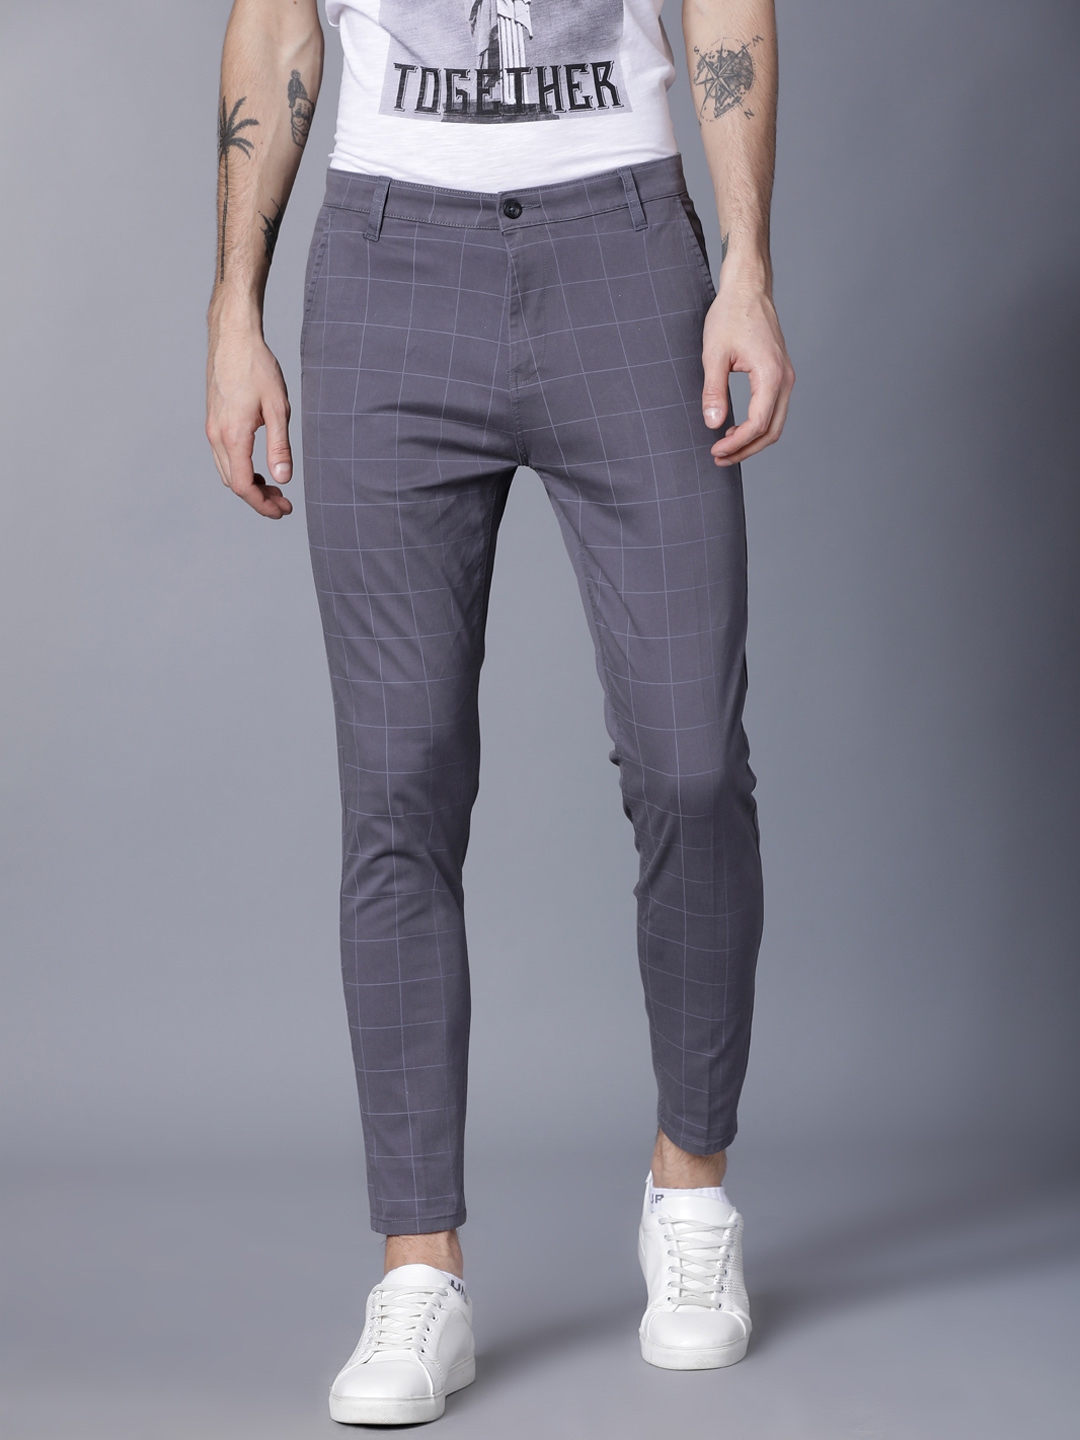 Buy Grey Trousers  Pants for Men by NETPLAY Online  Ajiocom